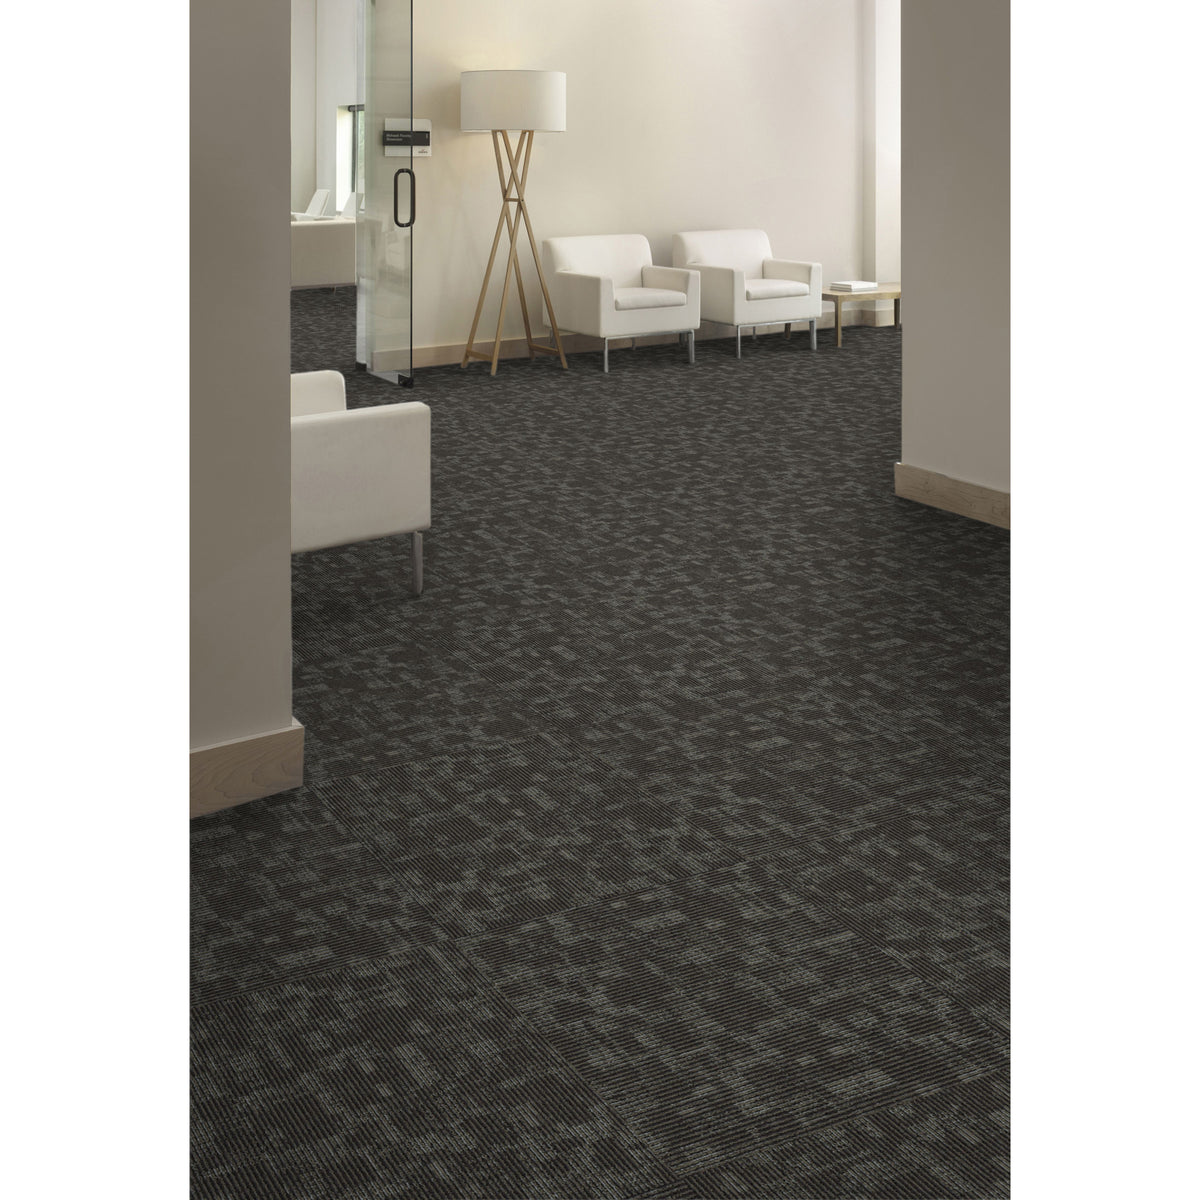 Aladdin Commercial - Cognitive Plank - Cool Calm - Carpet Tile - Insightful -  Room Scene